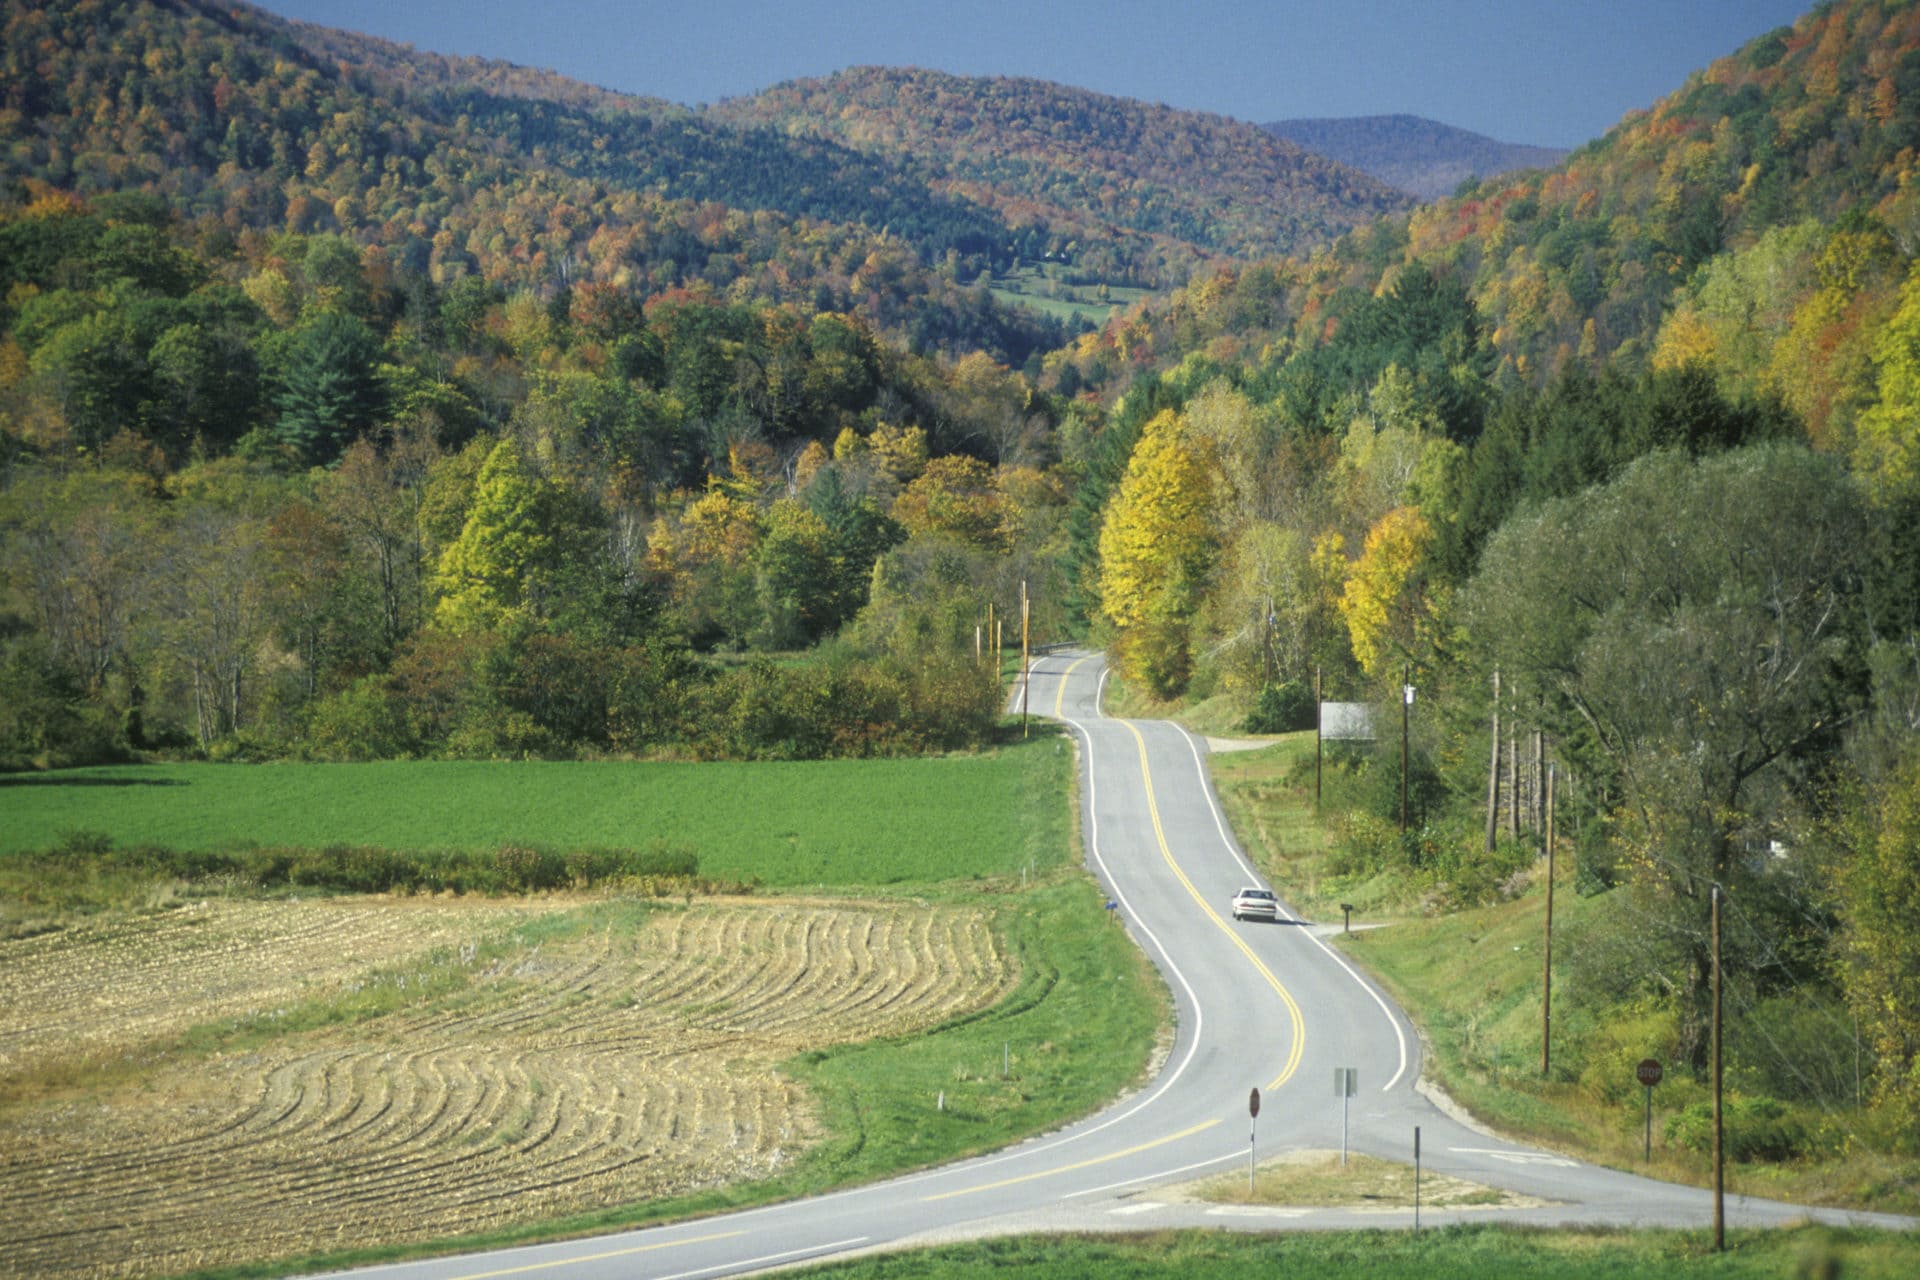 Explore Vermont via Route 100, the Green Mountain State’s 200-mile ‘Main Street’